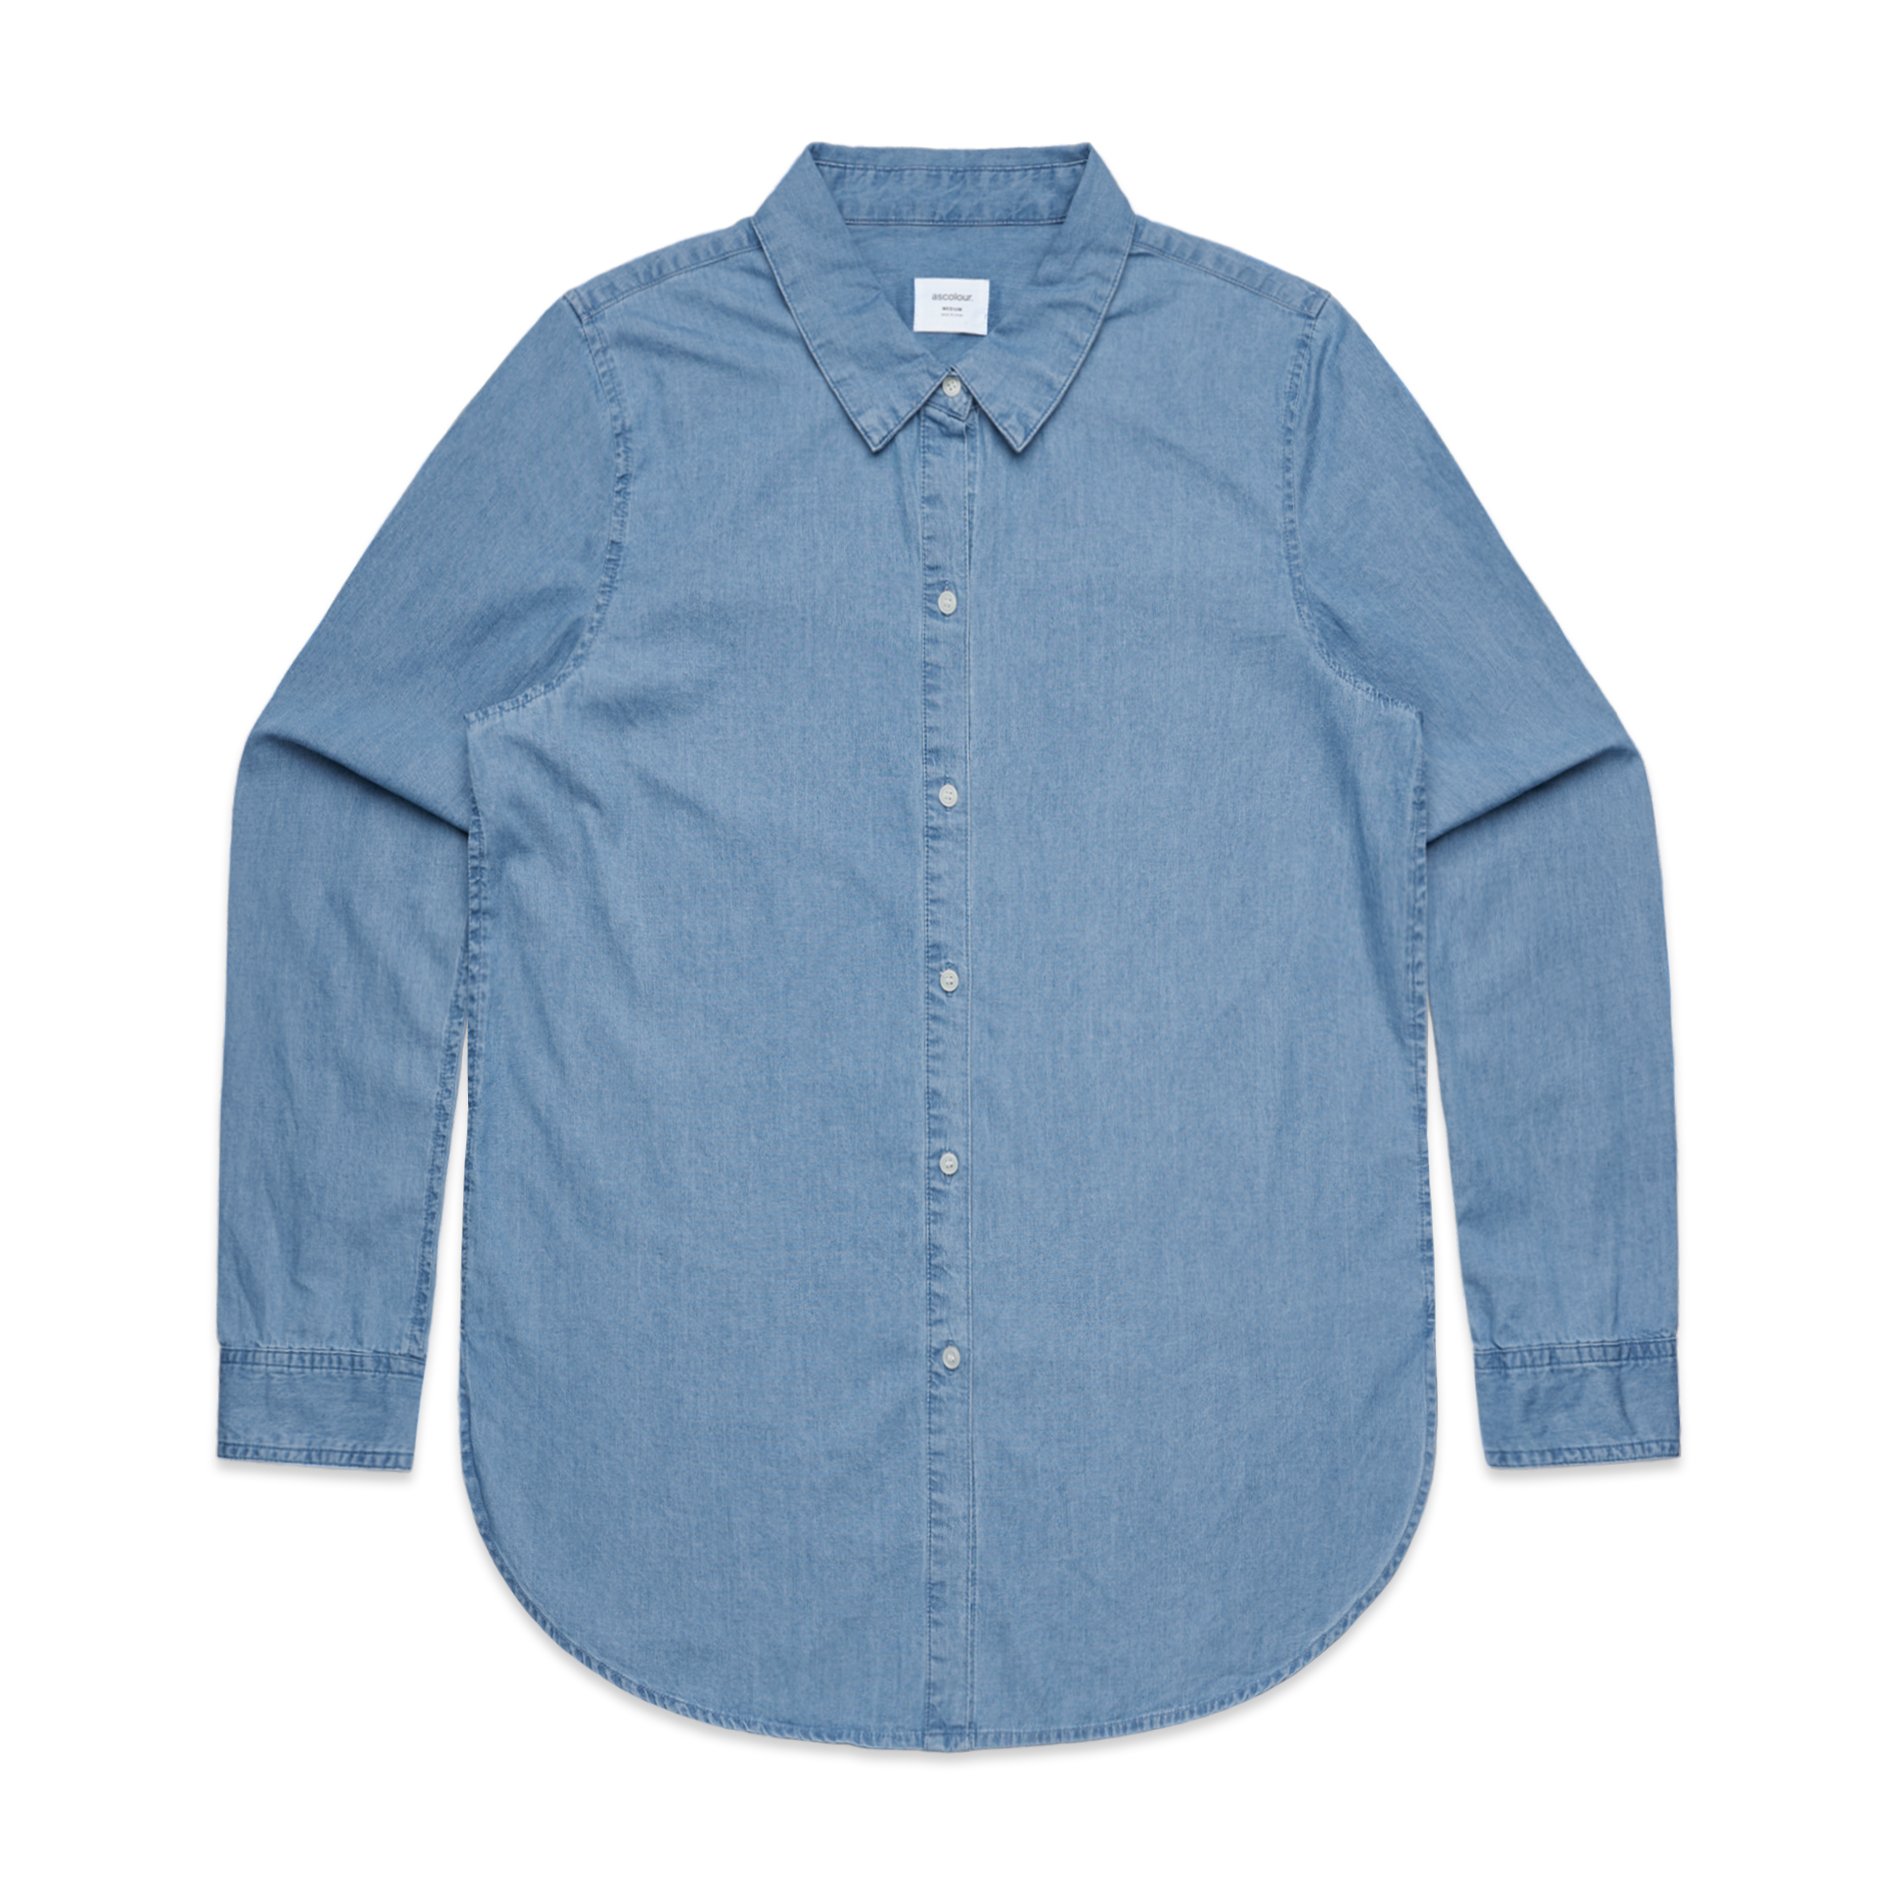 AS Colour Blue Denim Shirt - 4042